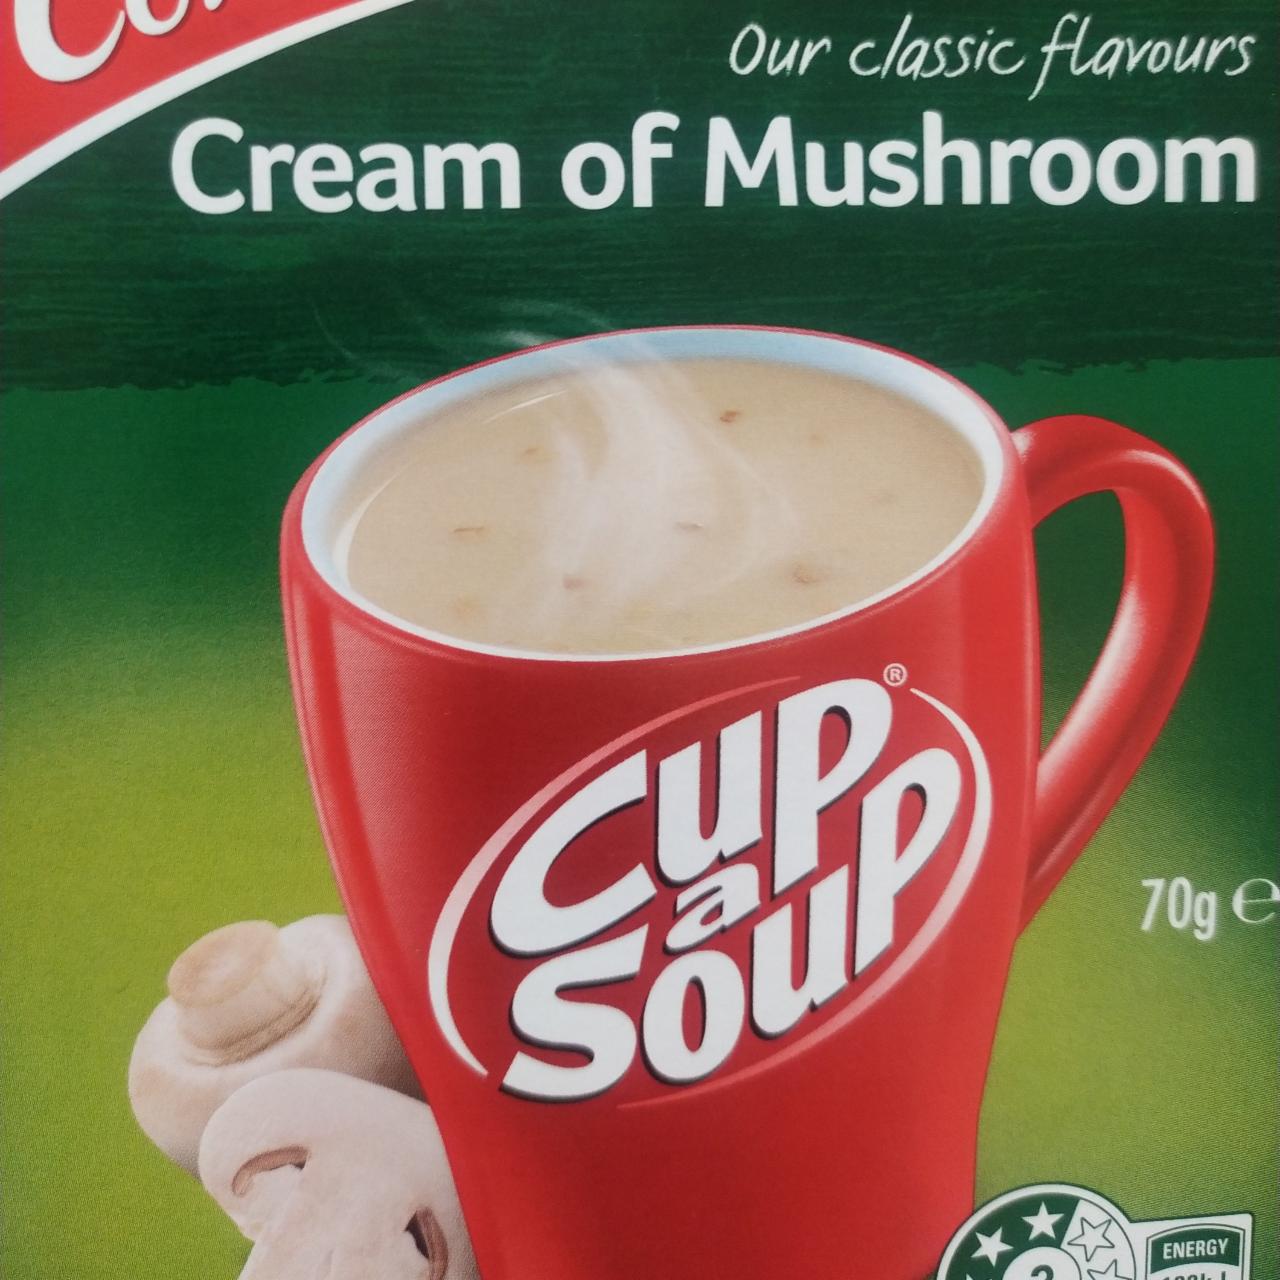 Fotografie - Cream of mushroom Cup a Soup Continental